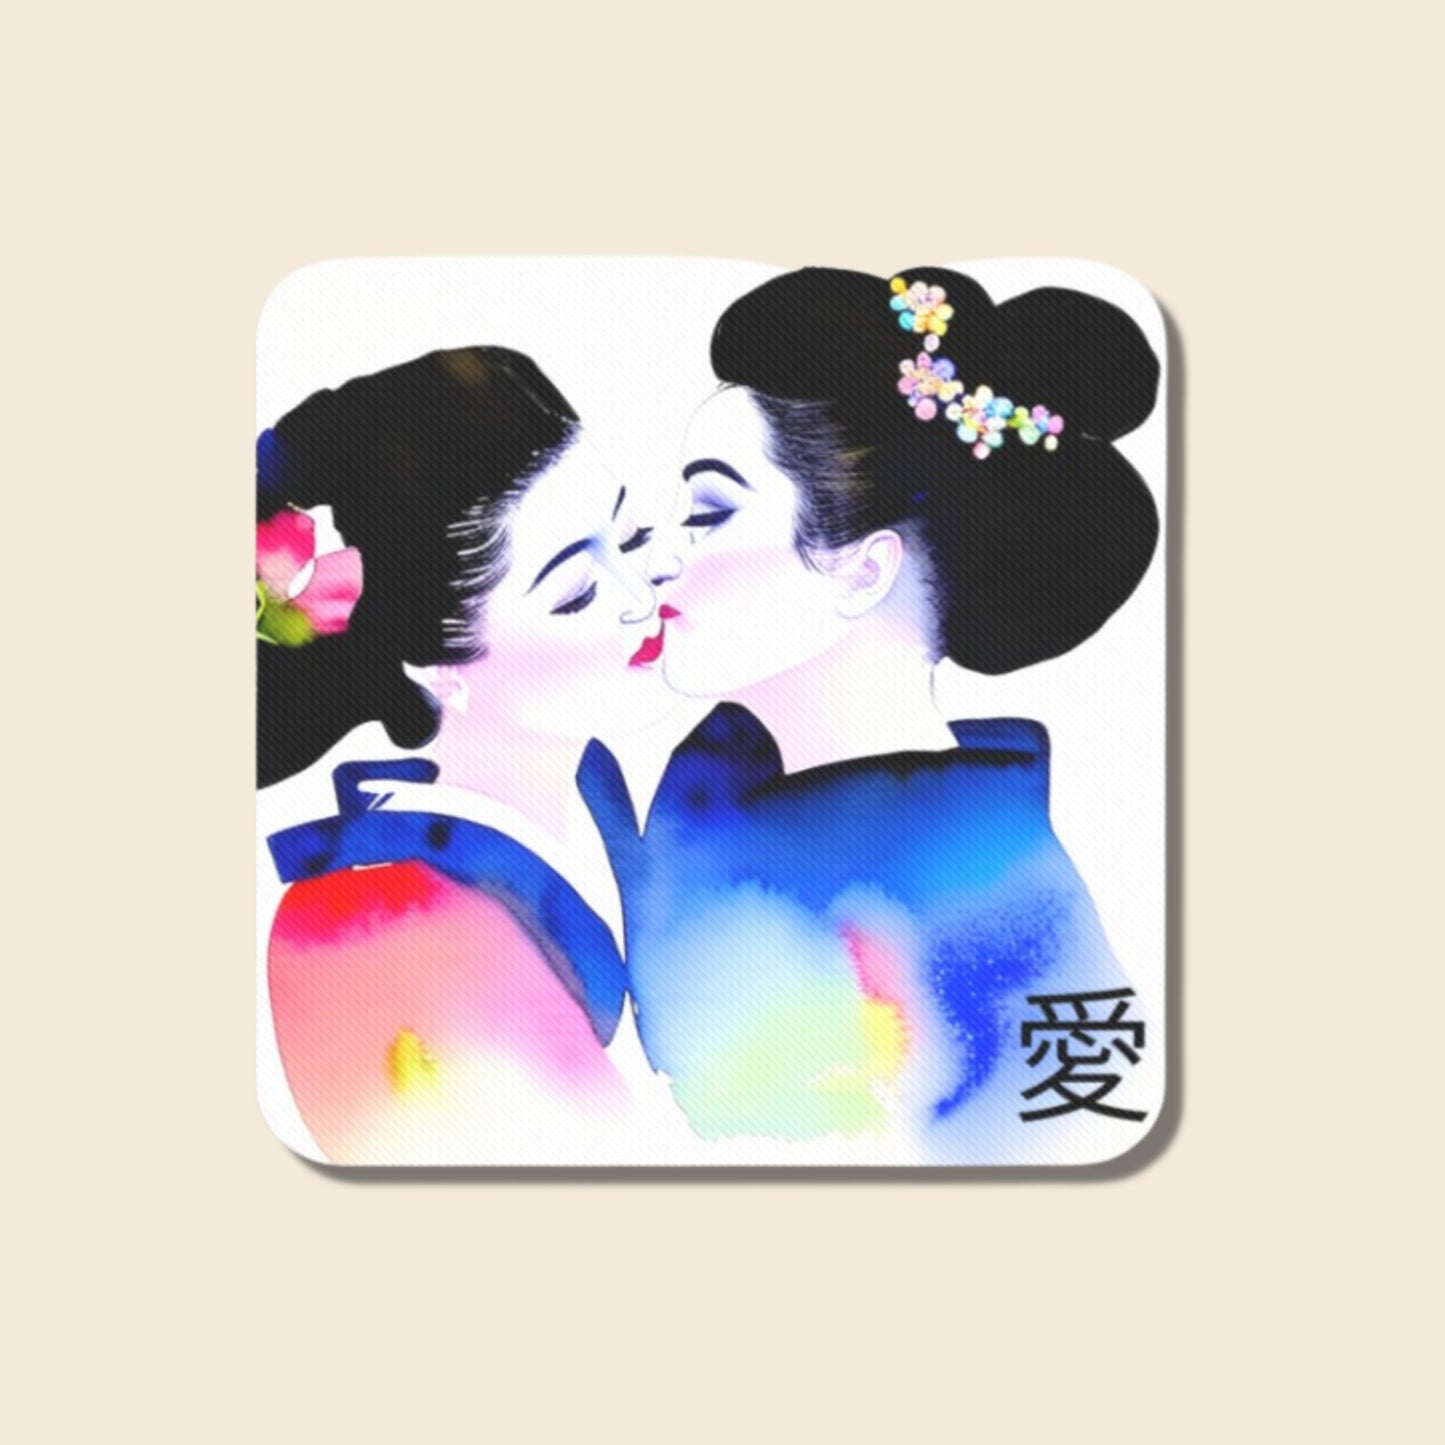 Geishas In Love Coasters option 2